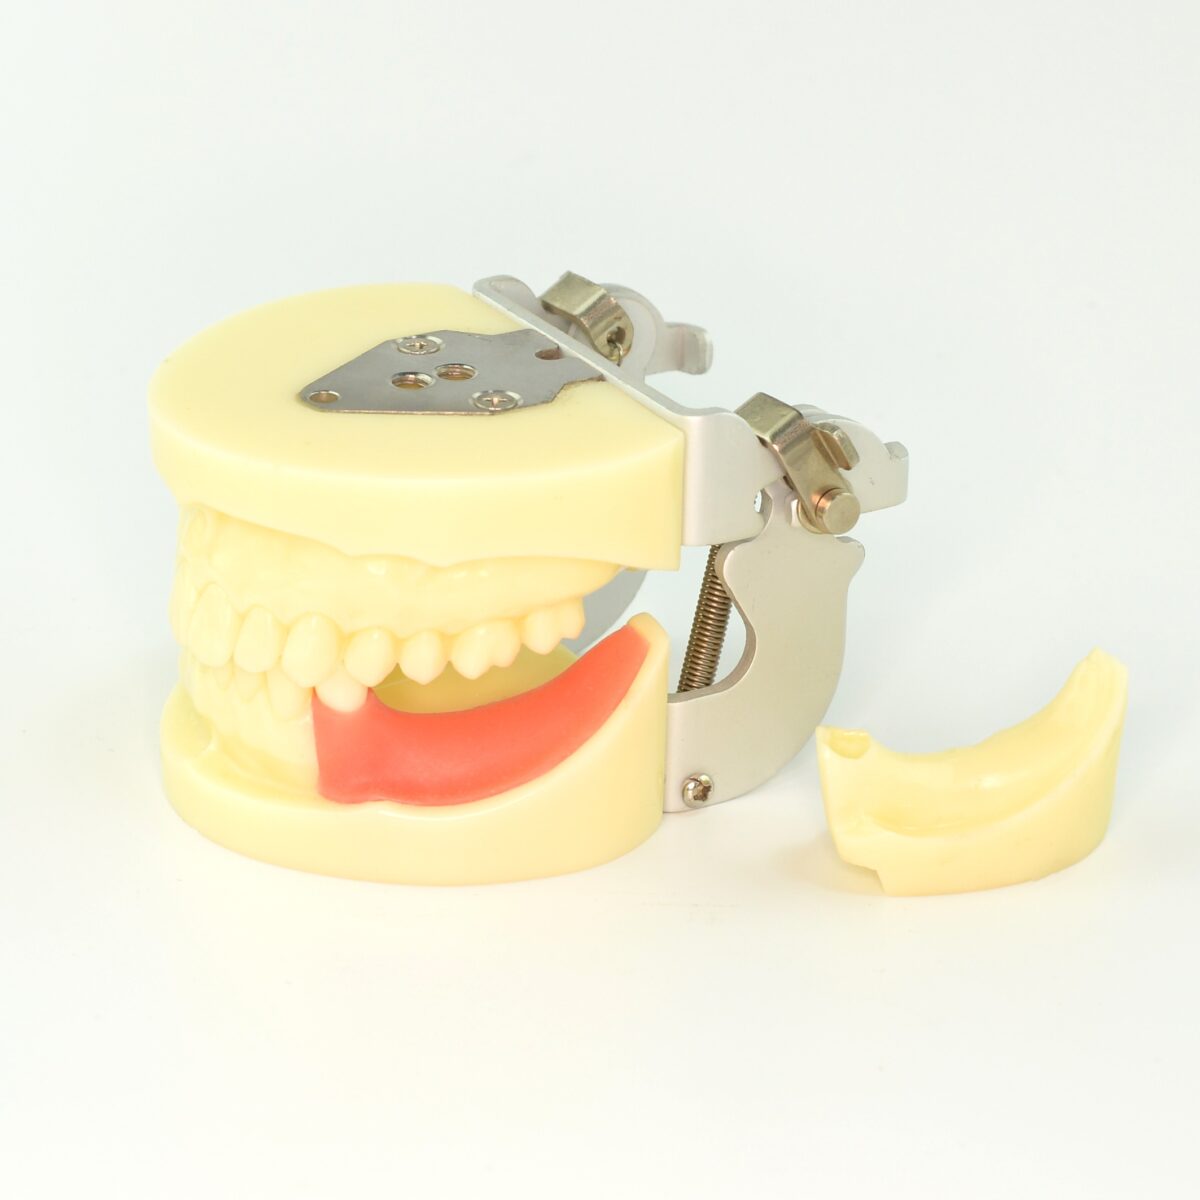 Drilling Training Dentistry Implant Model